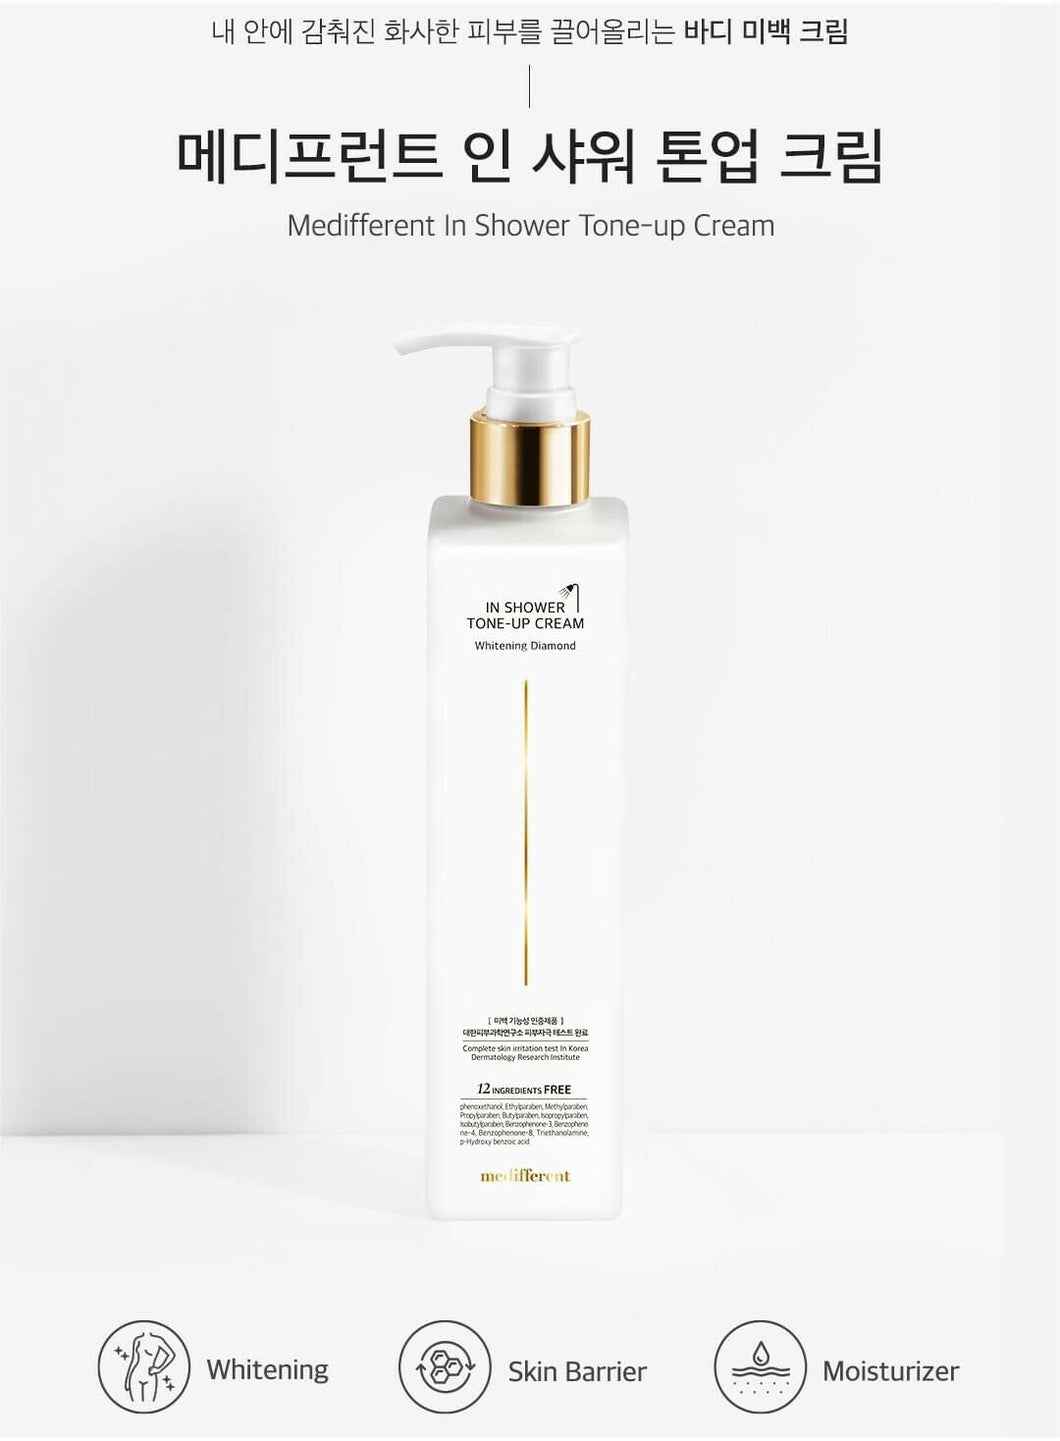 Medifferent in Shower White Body Tone Up Cream 300ml (NEW VERSION of JW Cream)